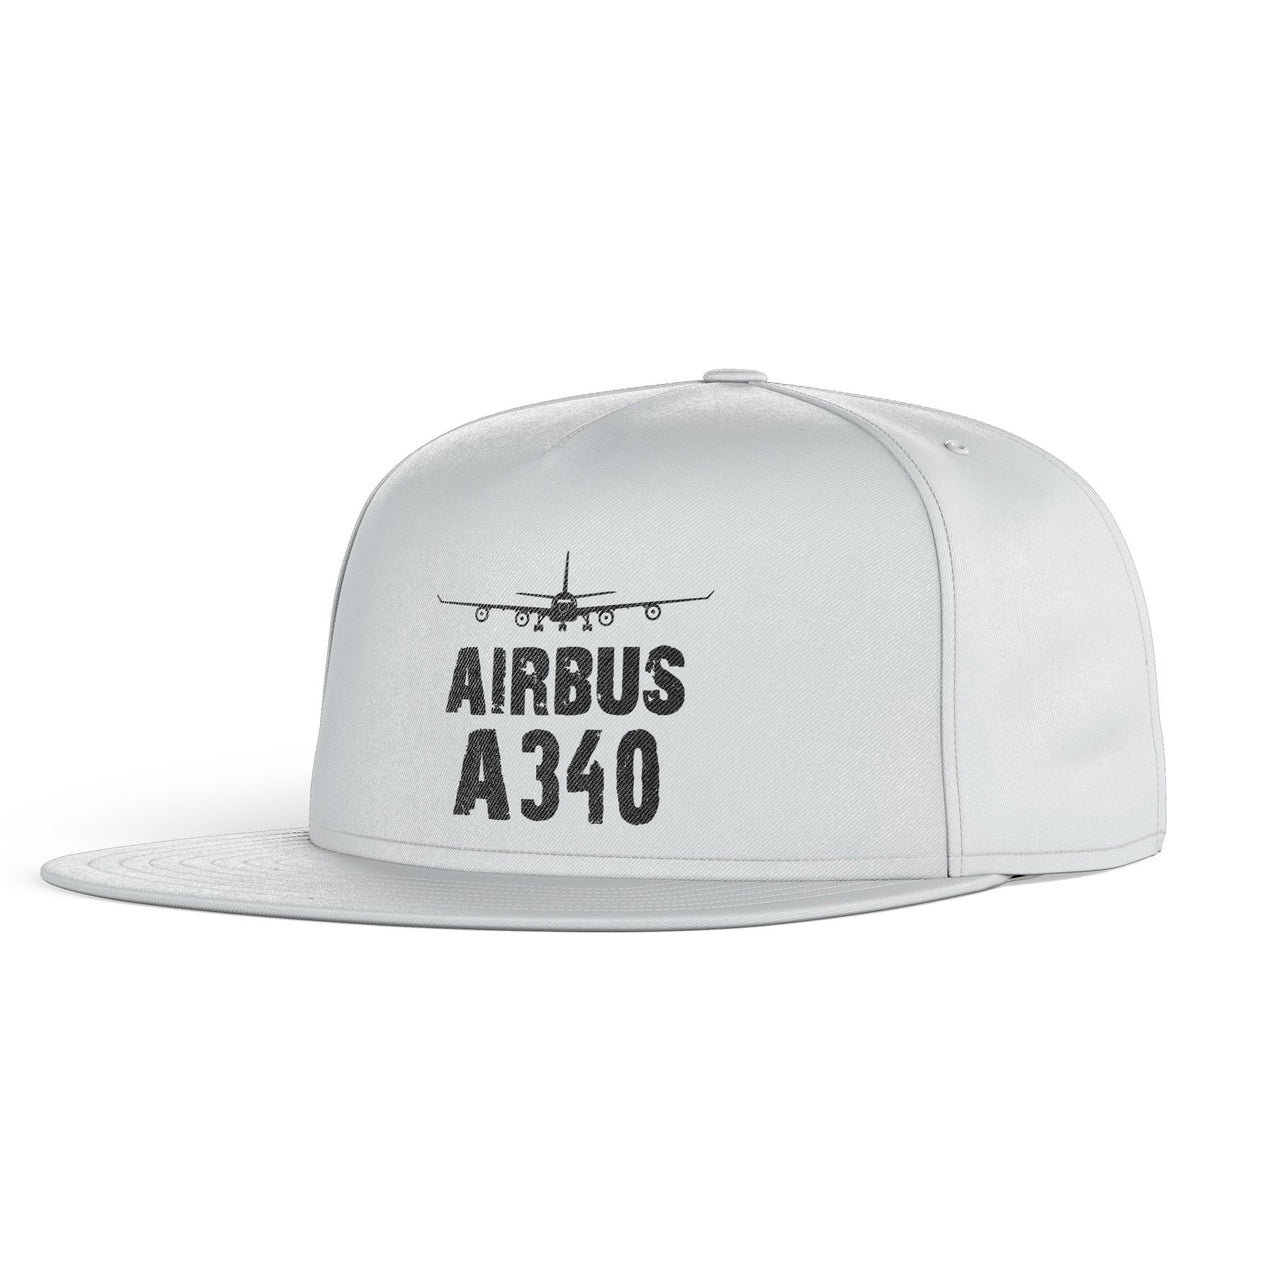 Airbus A340 & Plane Designed Snapback Caps & Hats